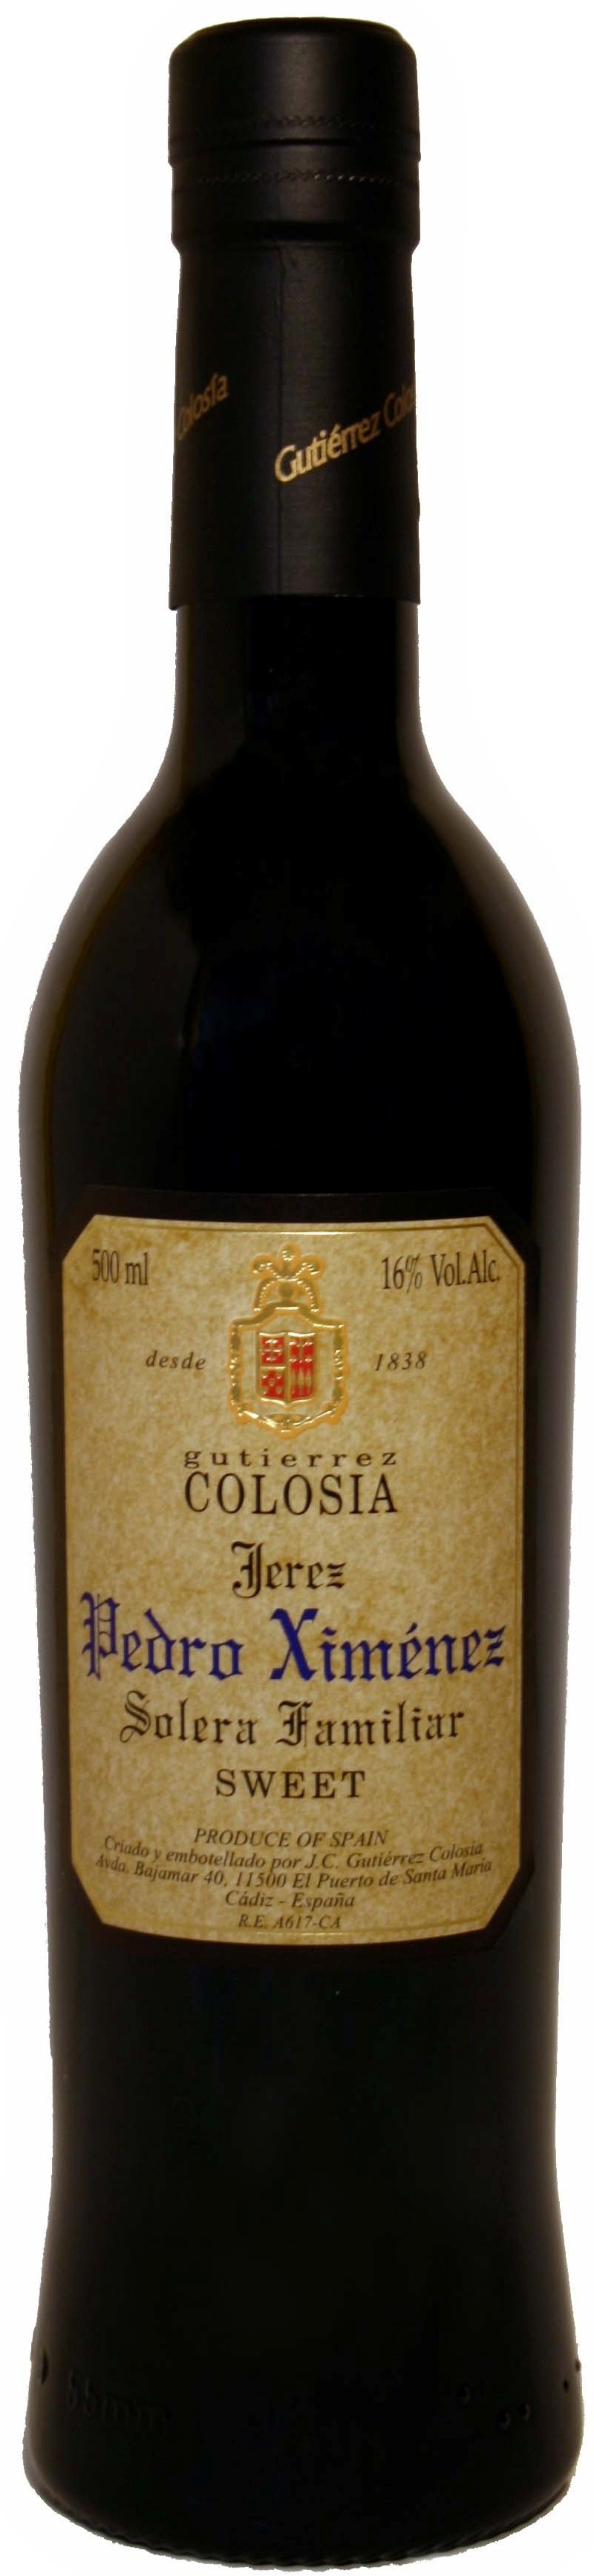 Image of Wine bottle Colosía Solera Familiar Pedro Ximénez